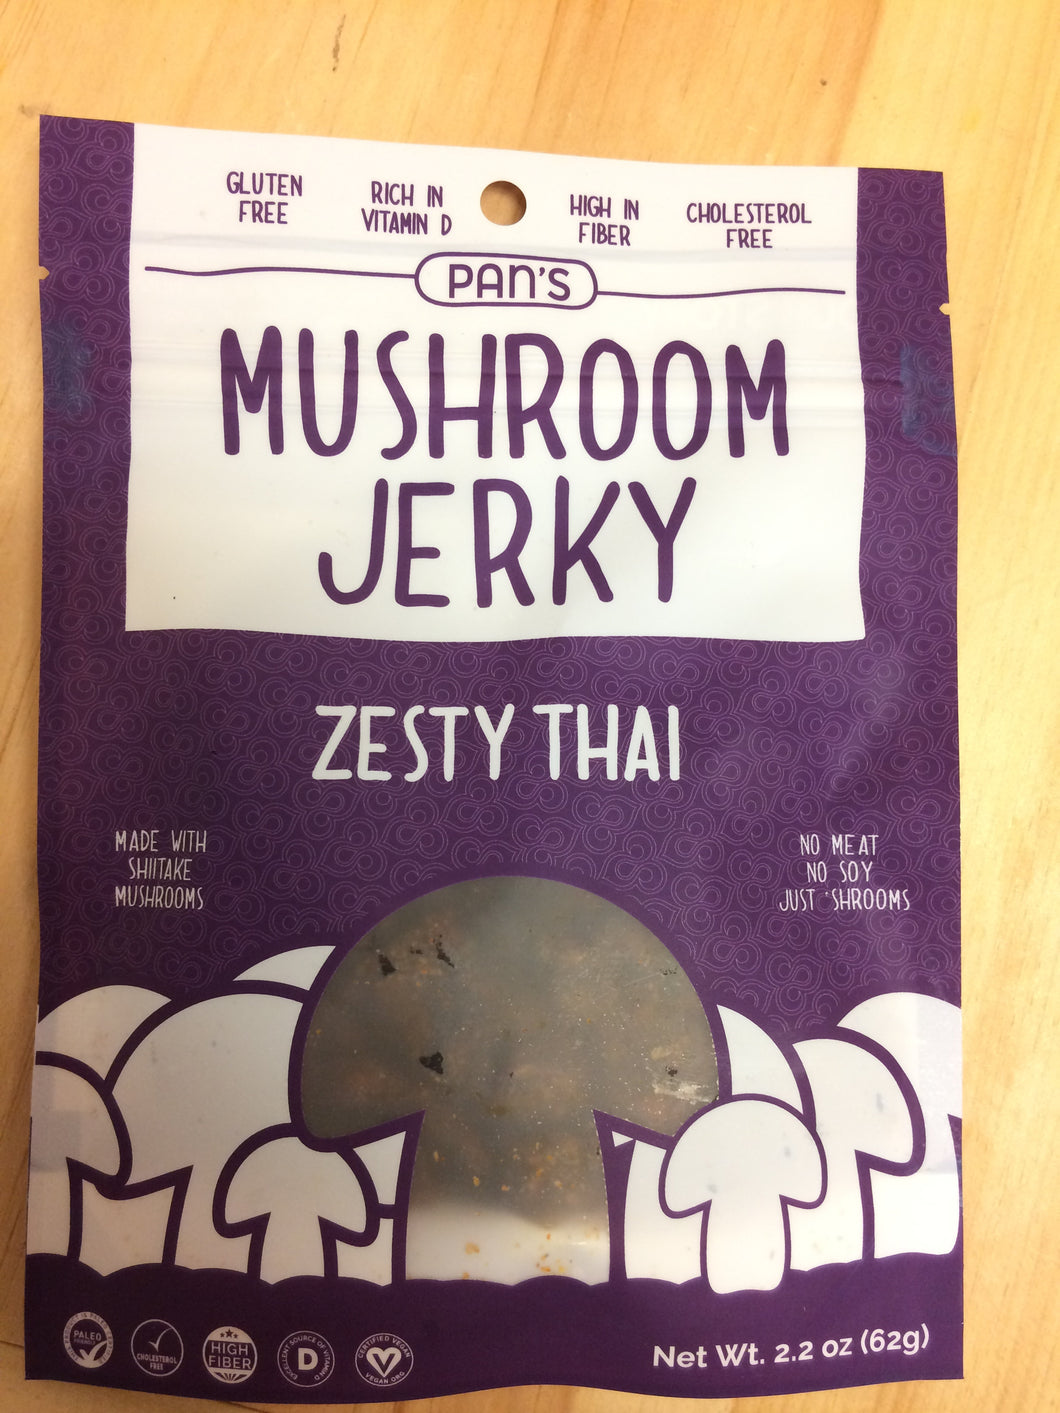 Vegan Jerky - Pan's Zesty Thai Mushroom